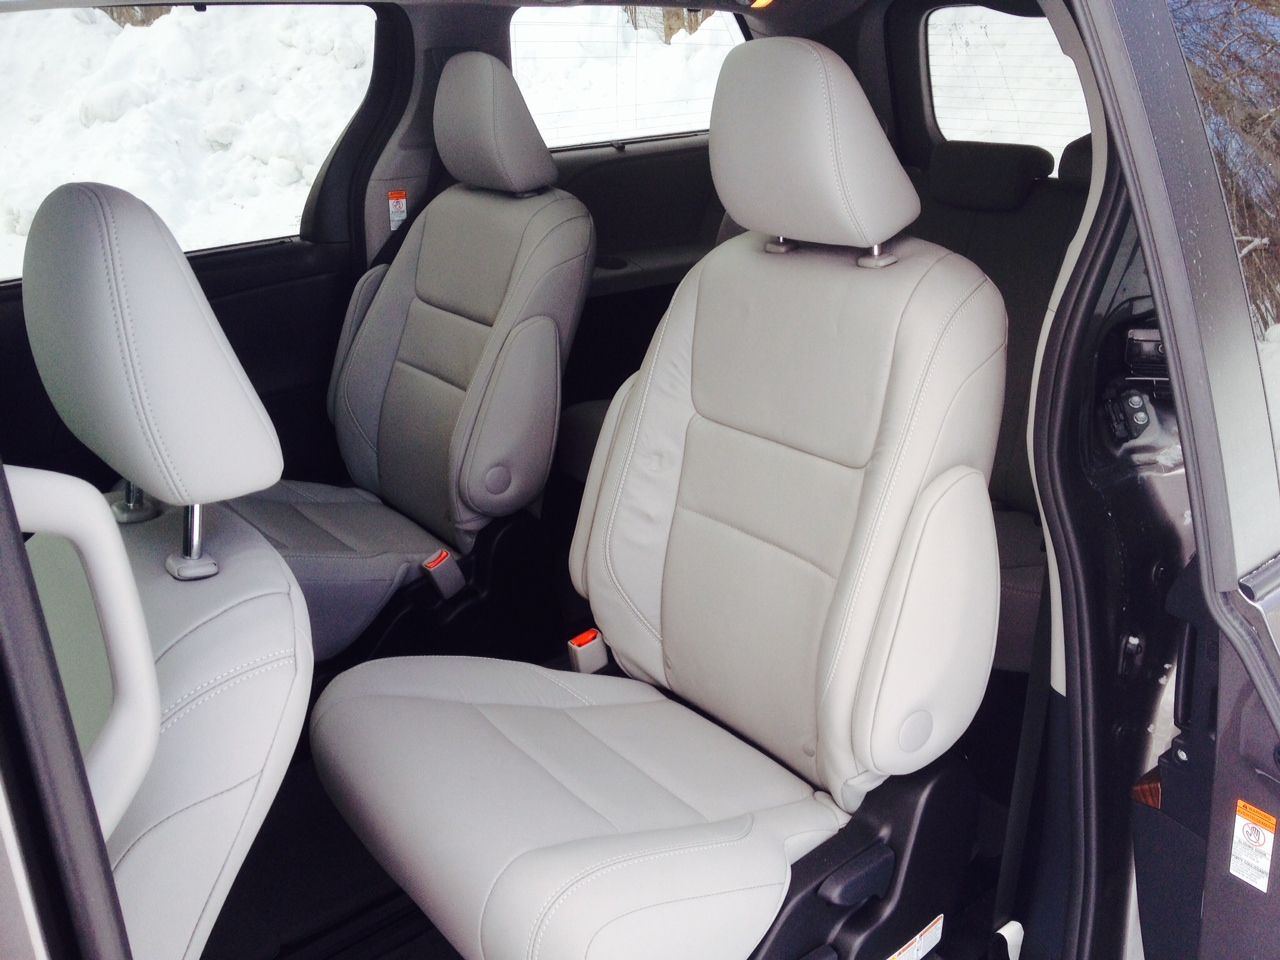 2015 Toyota Sienna Premium AWD: Driven